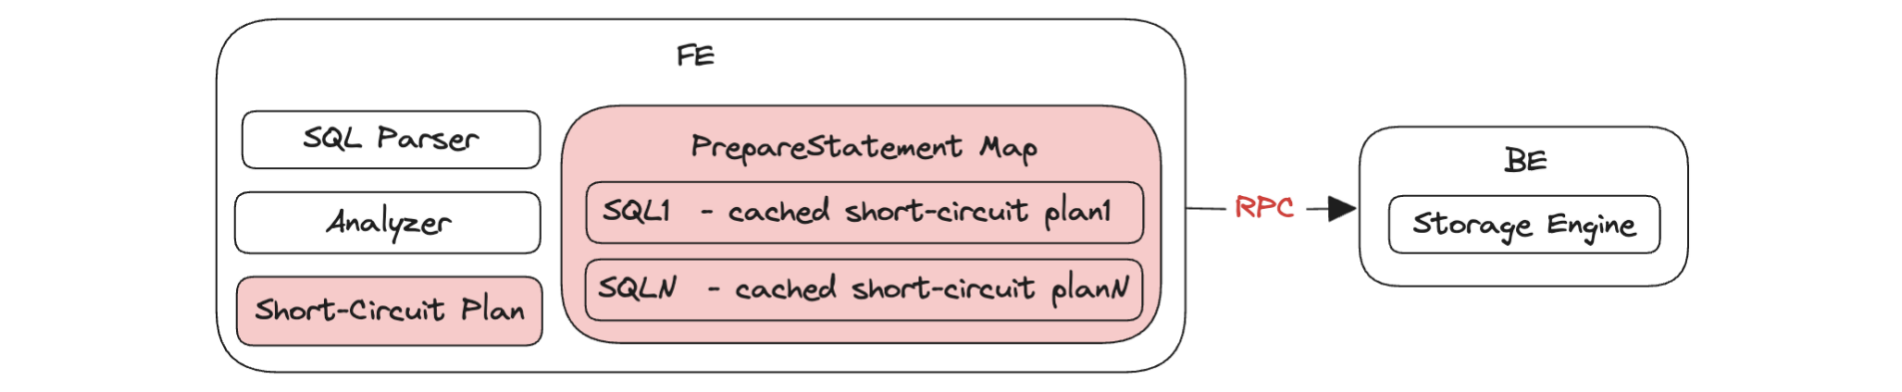 prepared-statement-and-short-circuit-plan